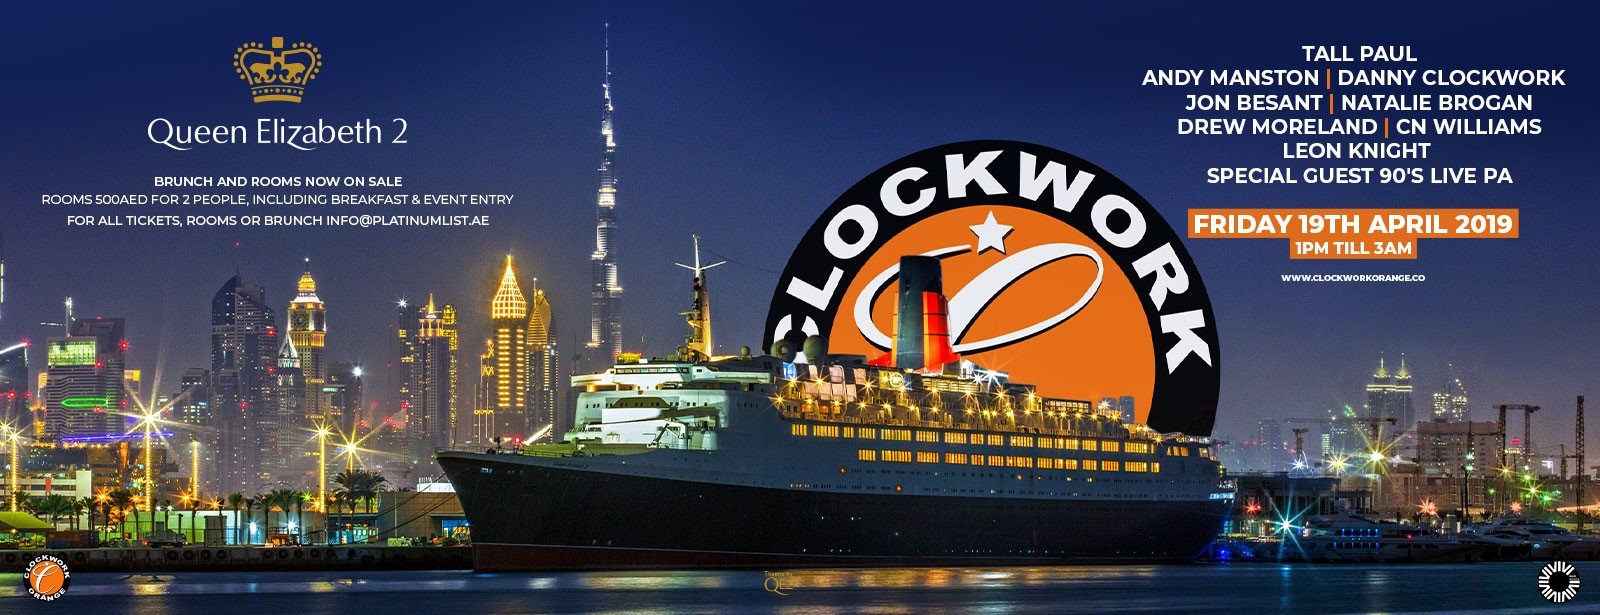 Clockwork Orange at the Queen Elizabeth 2 - Coming Soon in UAE